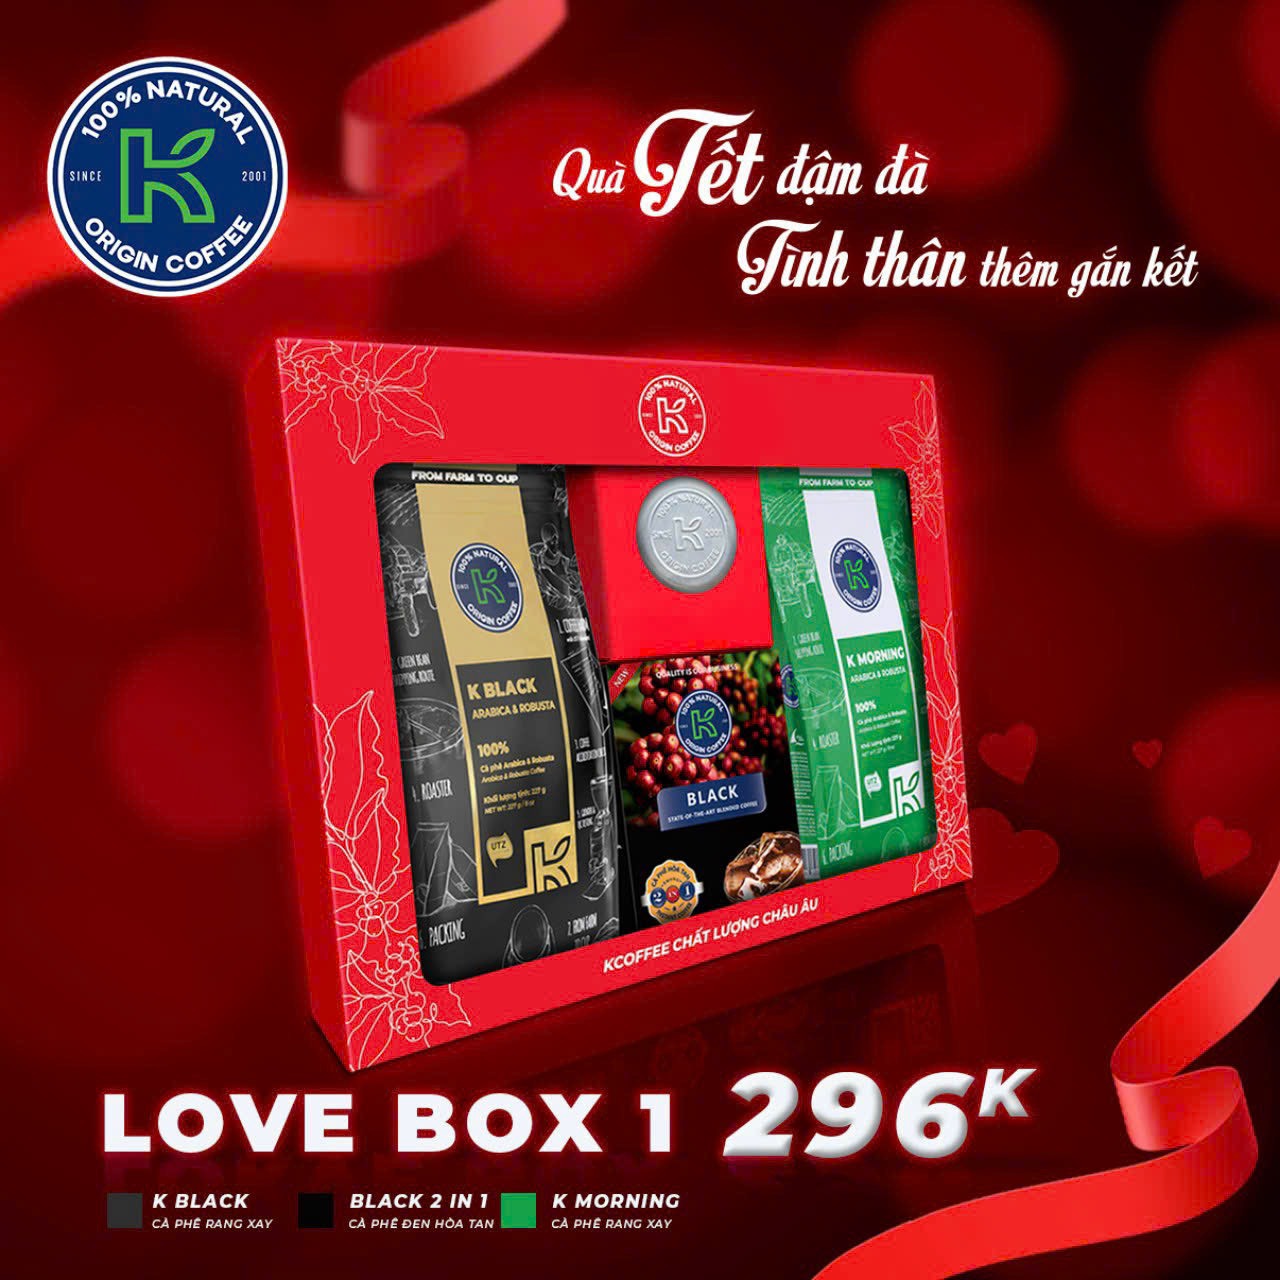 GIFTSET LOVE BOX 1